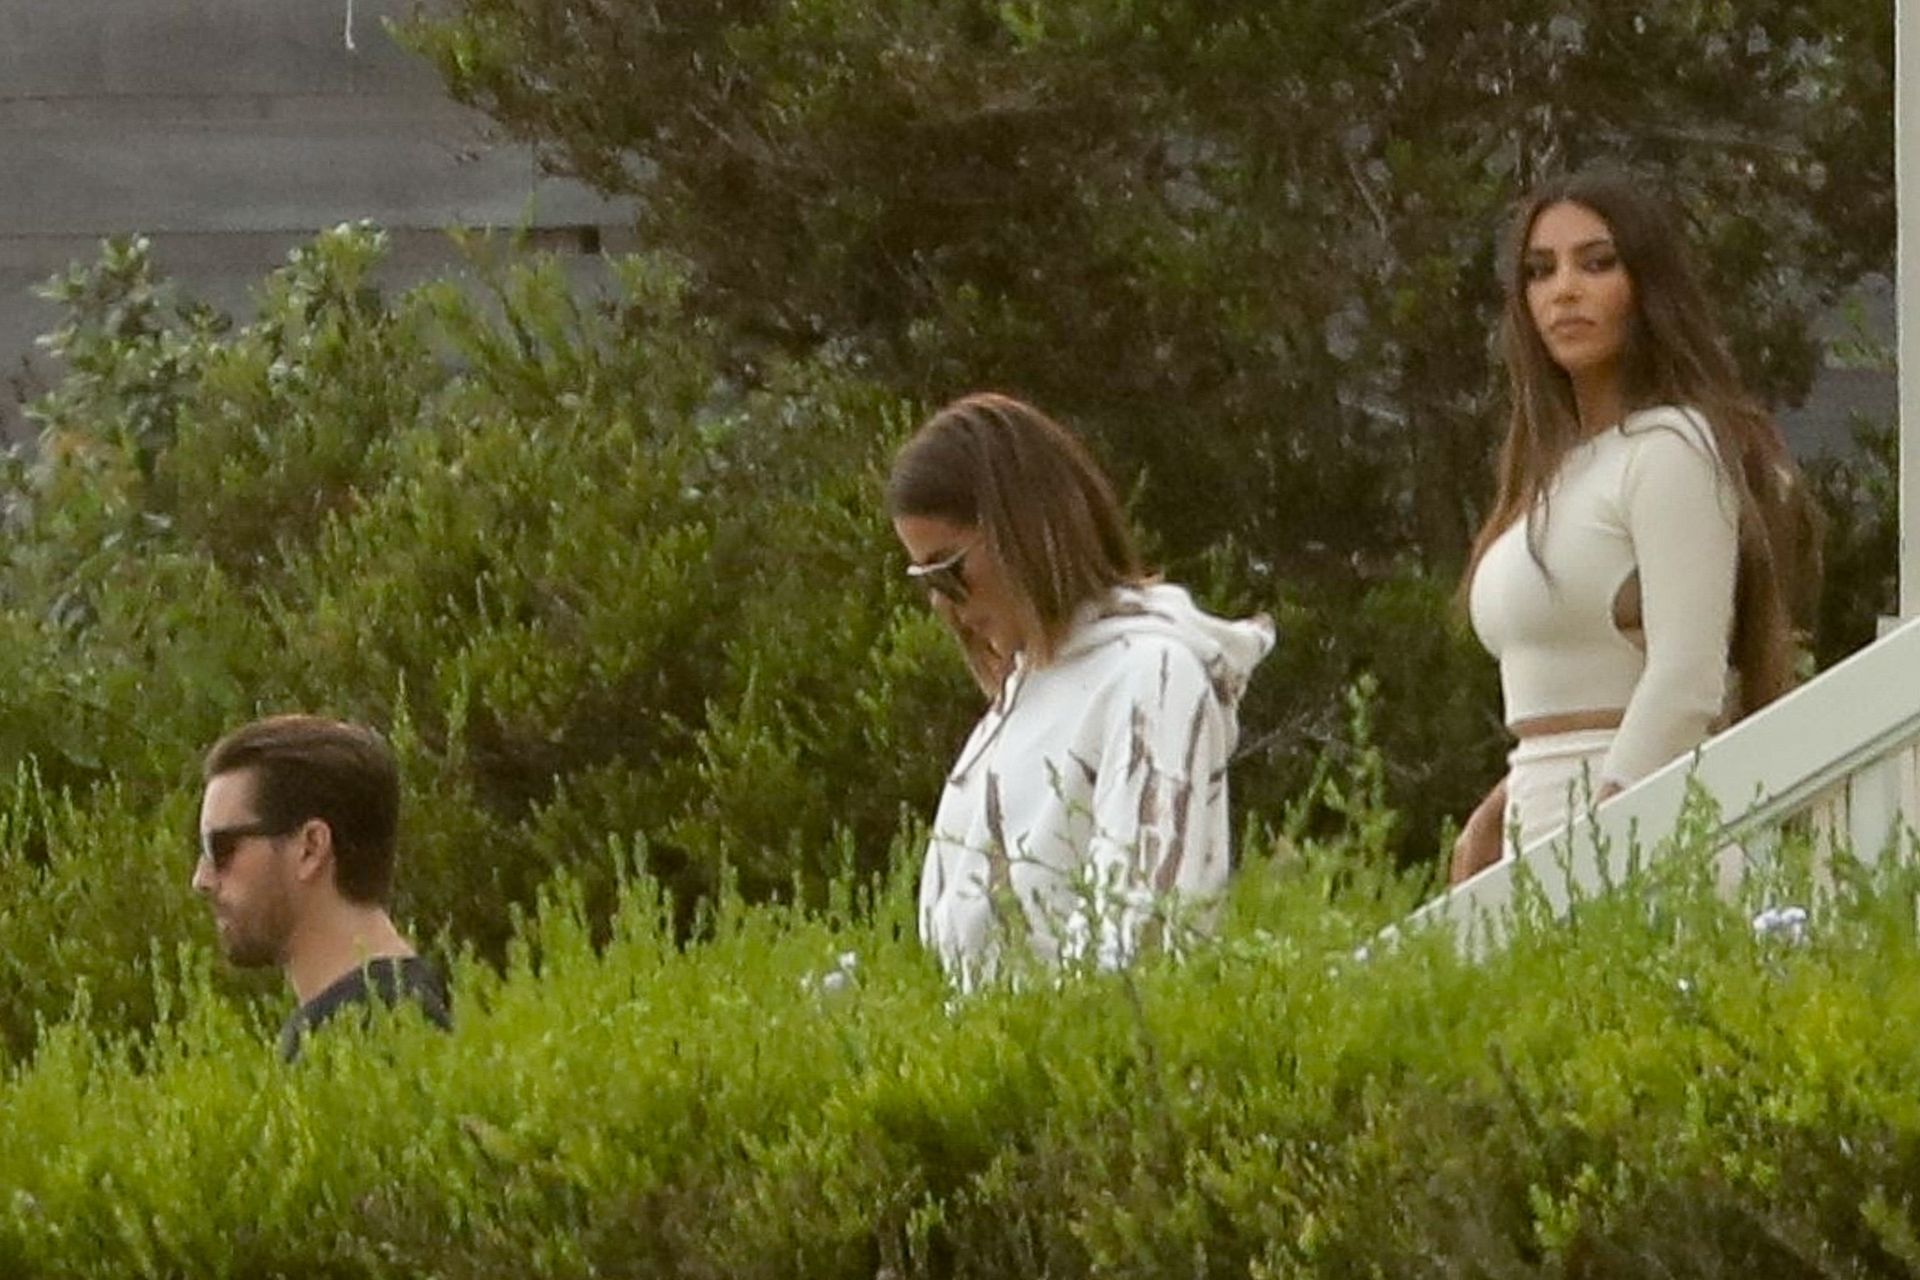 Kim Kardashian & Khloé Kardashian are Seen Filming on the Beach (54 Photos)